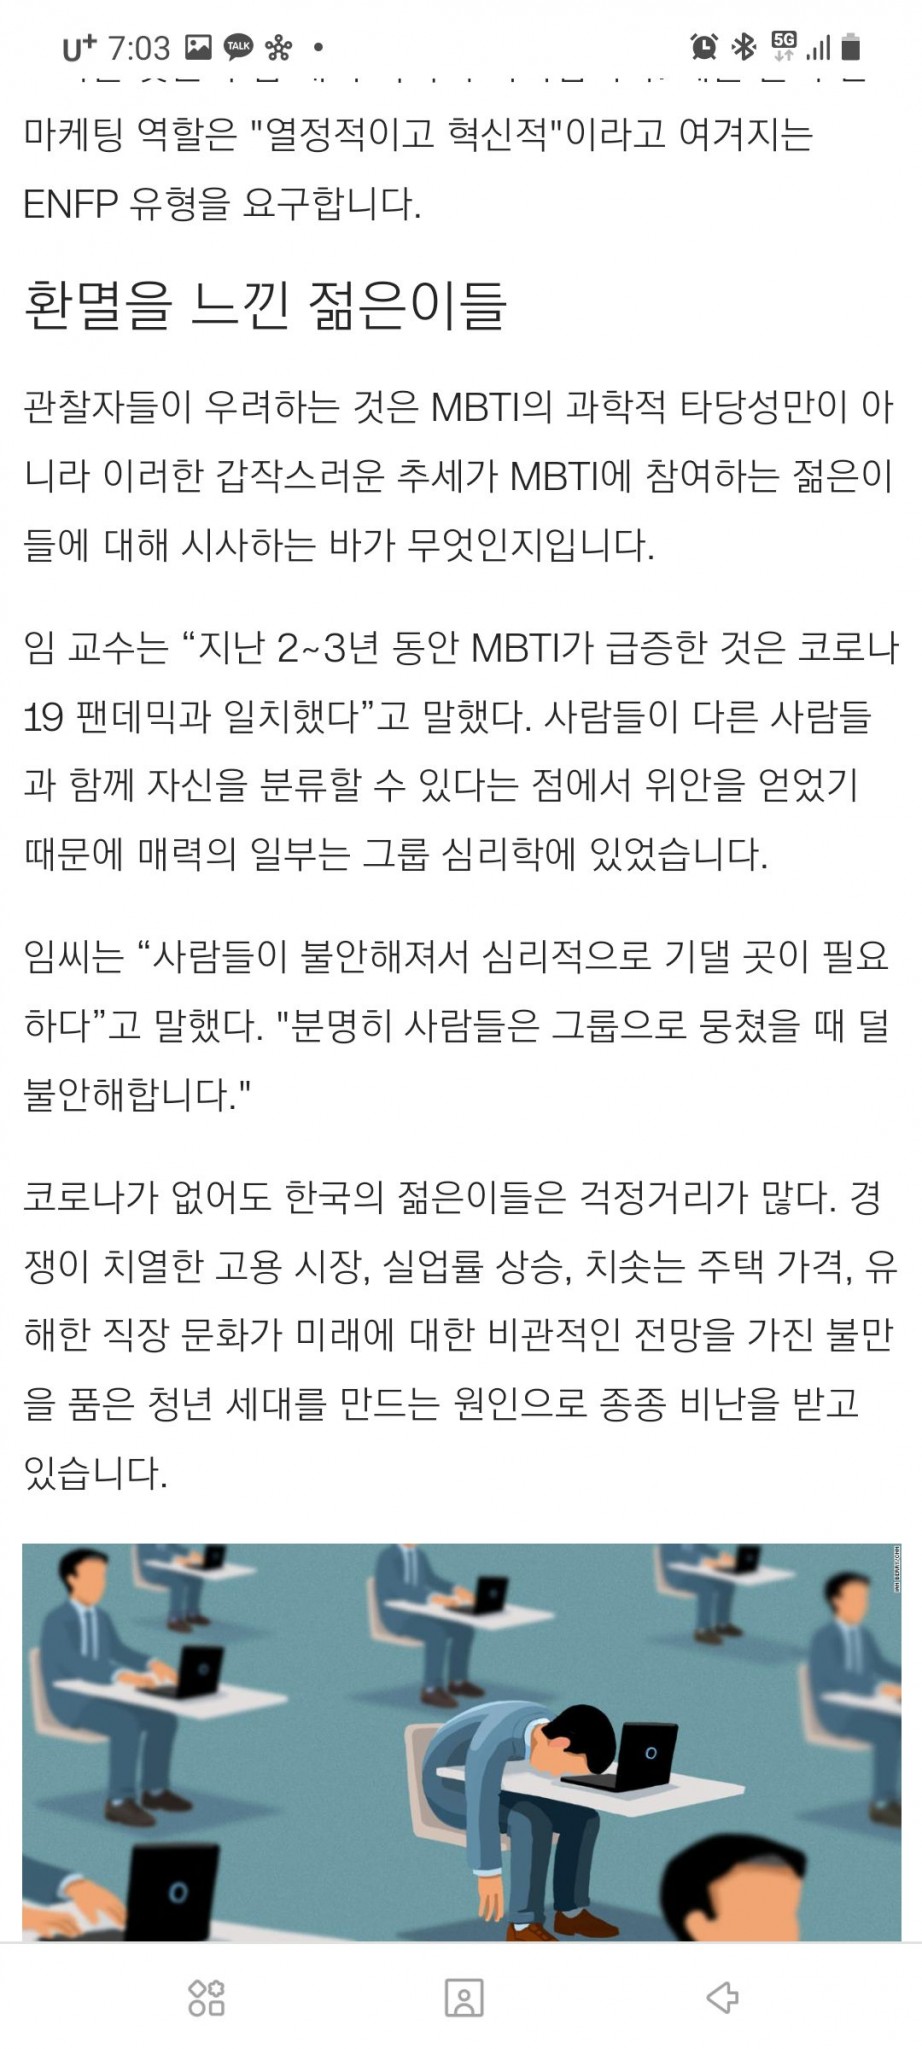 CNN에서 분석한 한국에서 MBTI가 유행한 이유